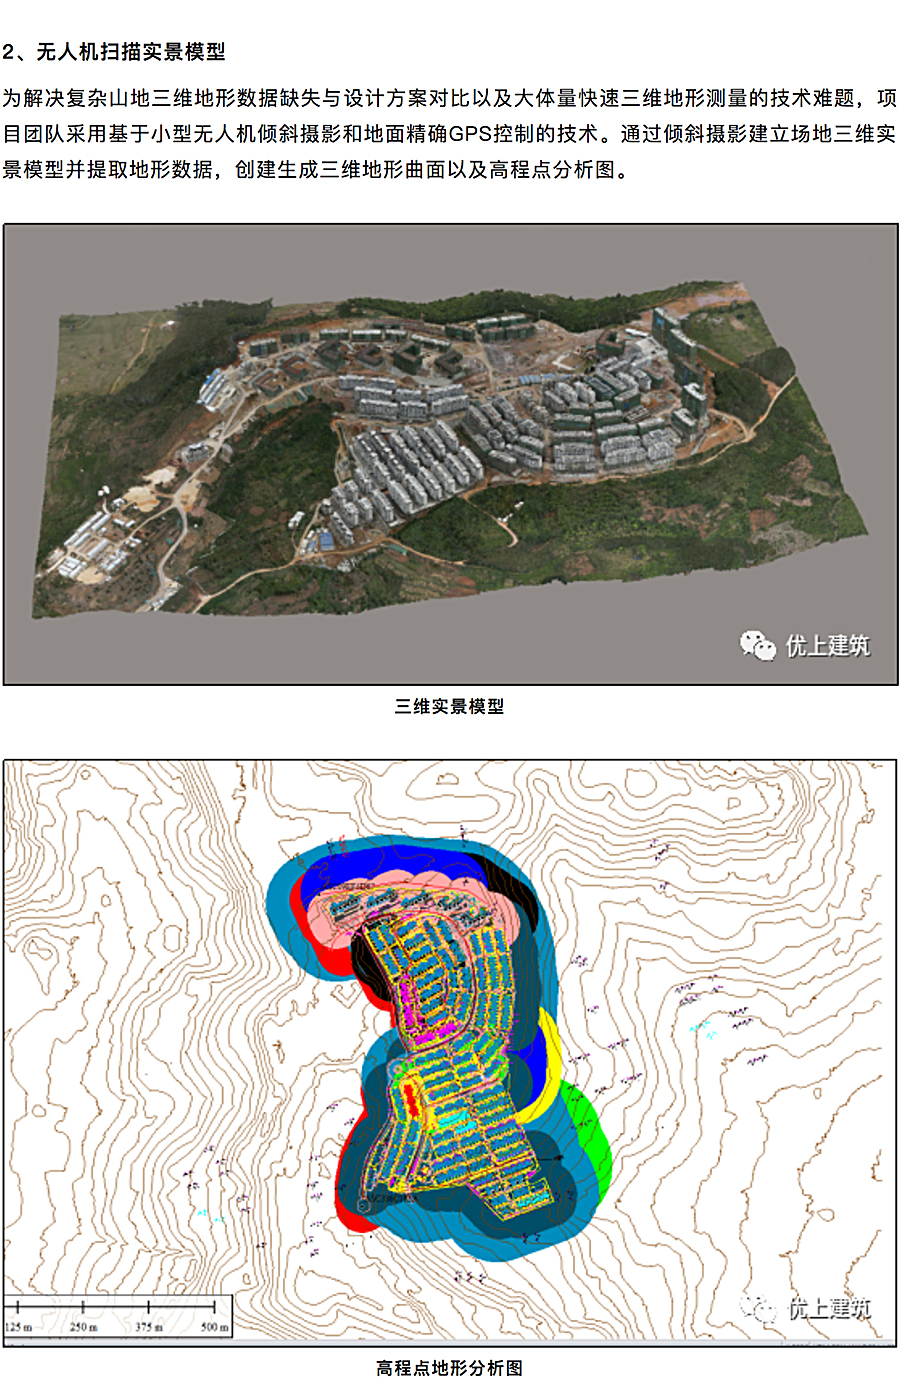 BIM技术在山地建筑中的应用案例展示-_-白塘湾国际旅游度假城金山岭项目_0003_图层-4.jpg